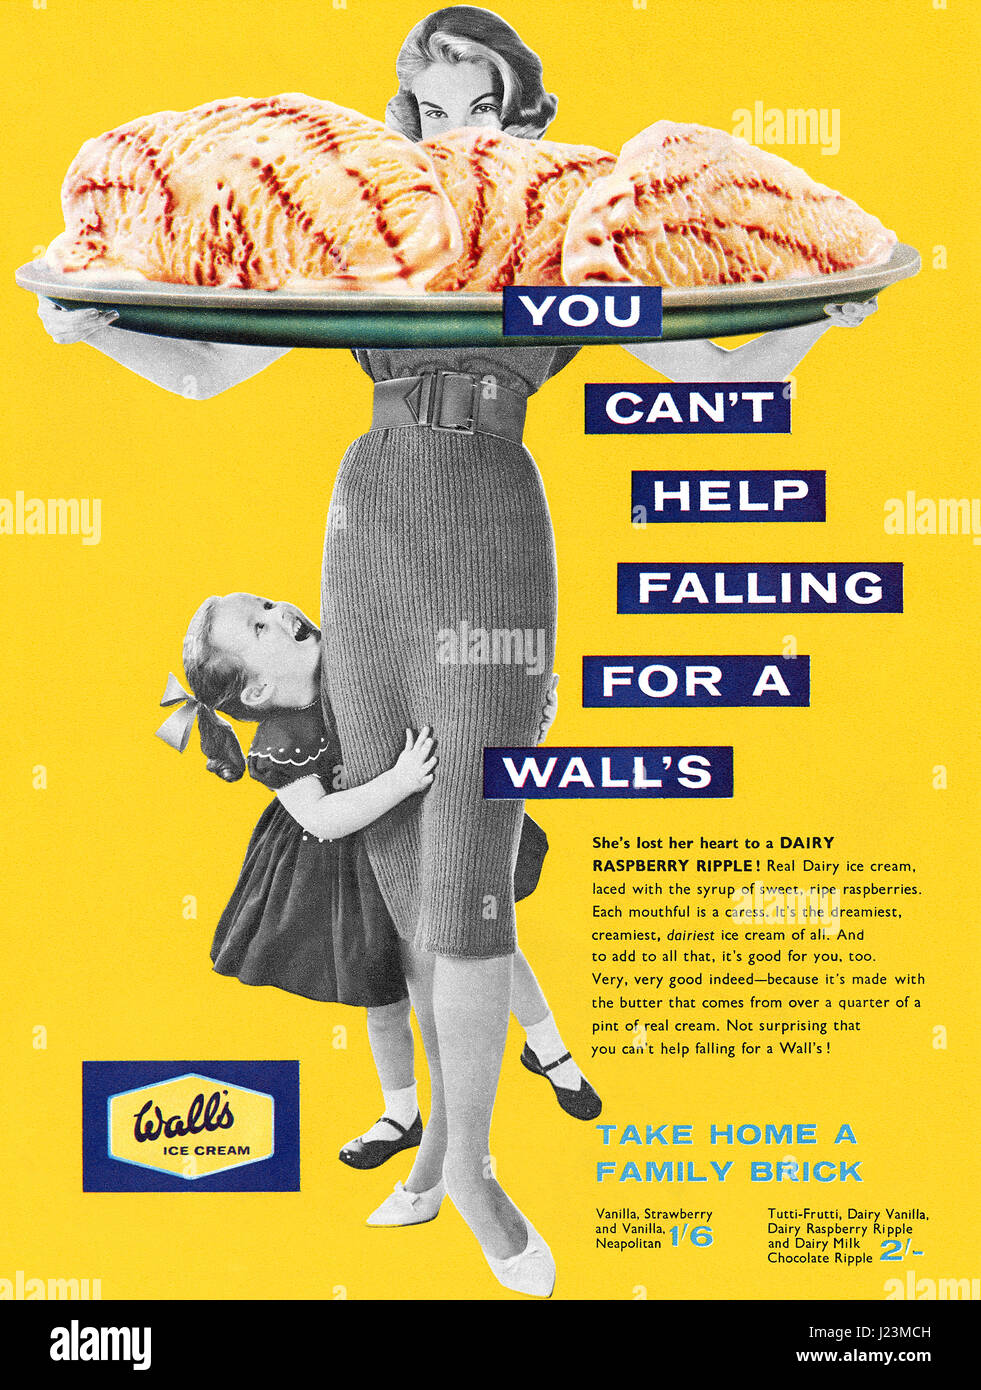 1959 British advertisement for Wall's Raspberry Ripple dairy ice cream. Stock Photo